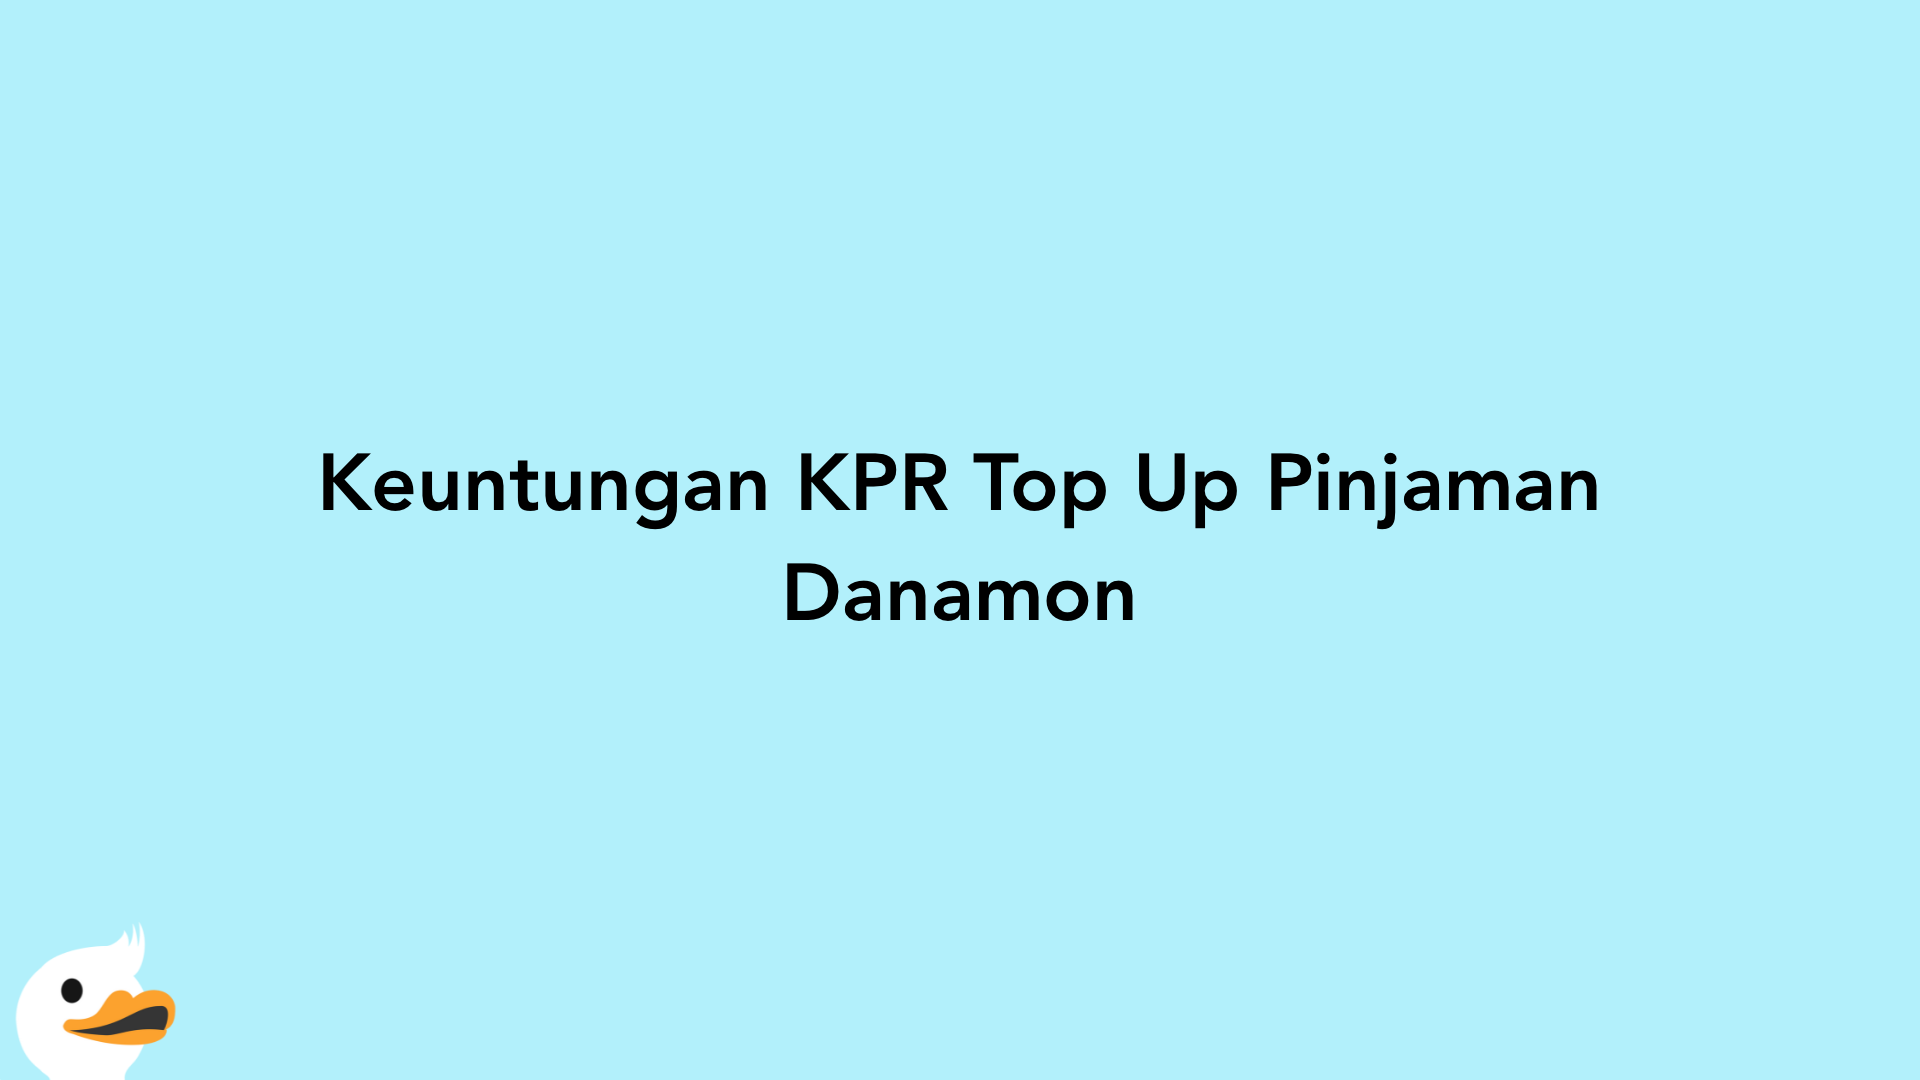 Keuntungan KPR Top Up Pinjaman Danamon